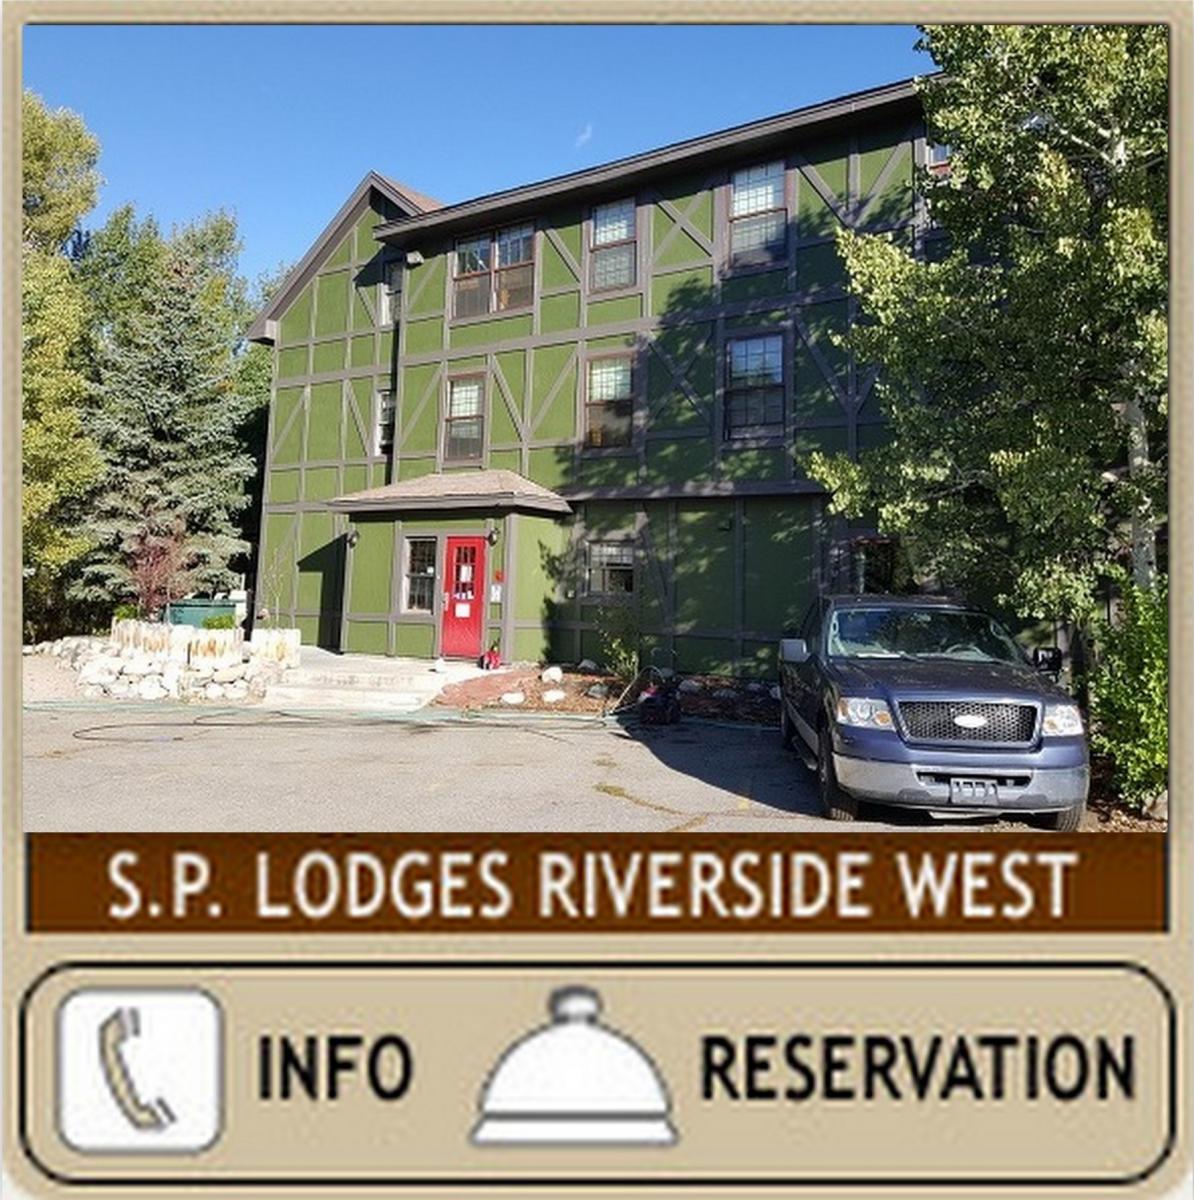 Summit Peaks Lodge Riverside West